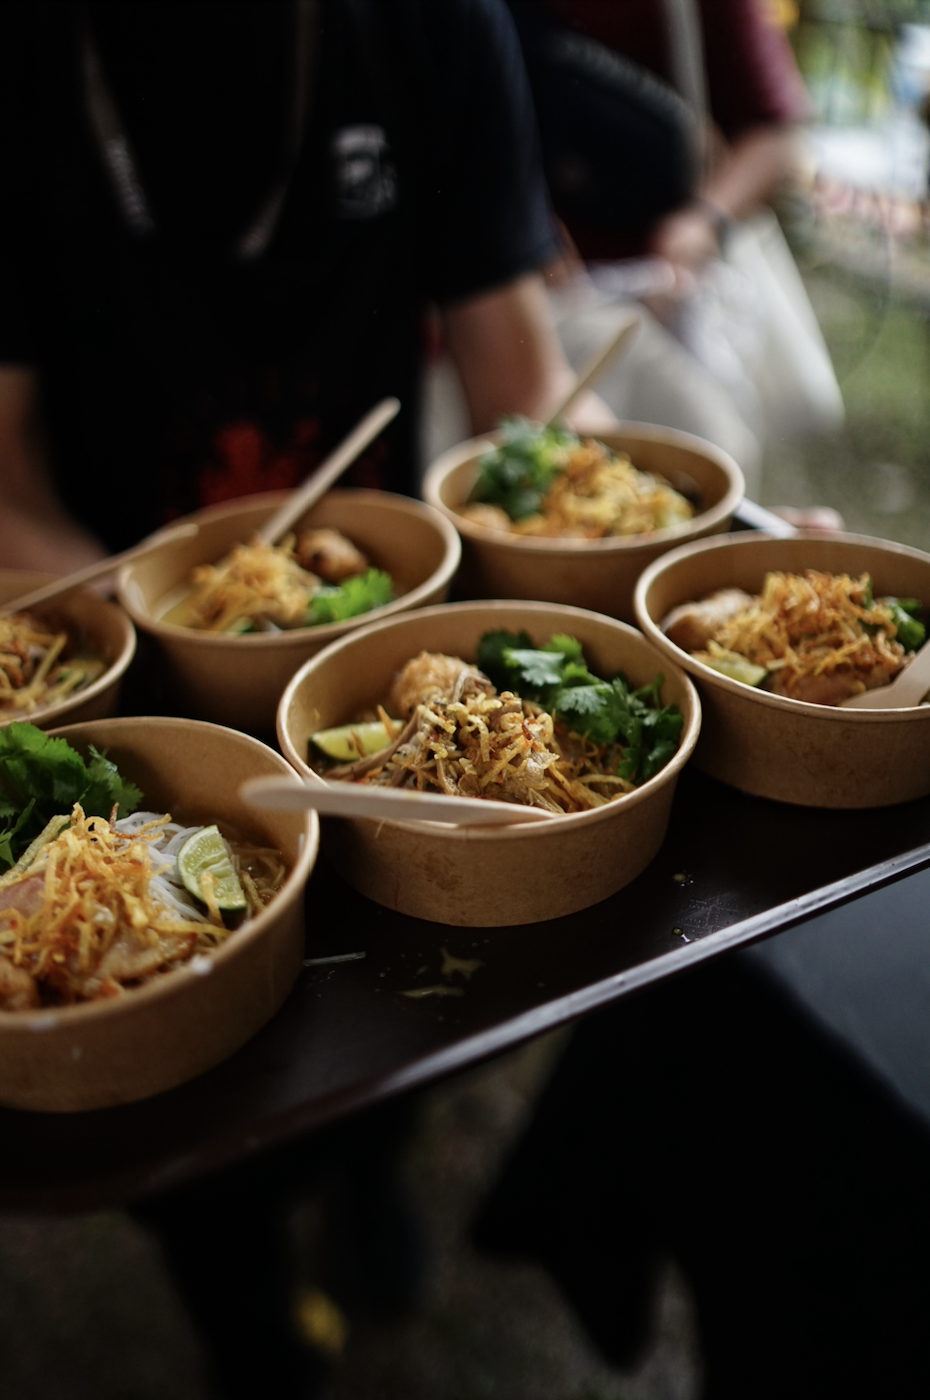 Ubud Food Festival 2023 Dishes, Qatar-Indonesia 2023 Year of Culture.